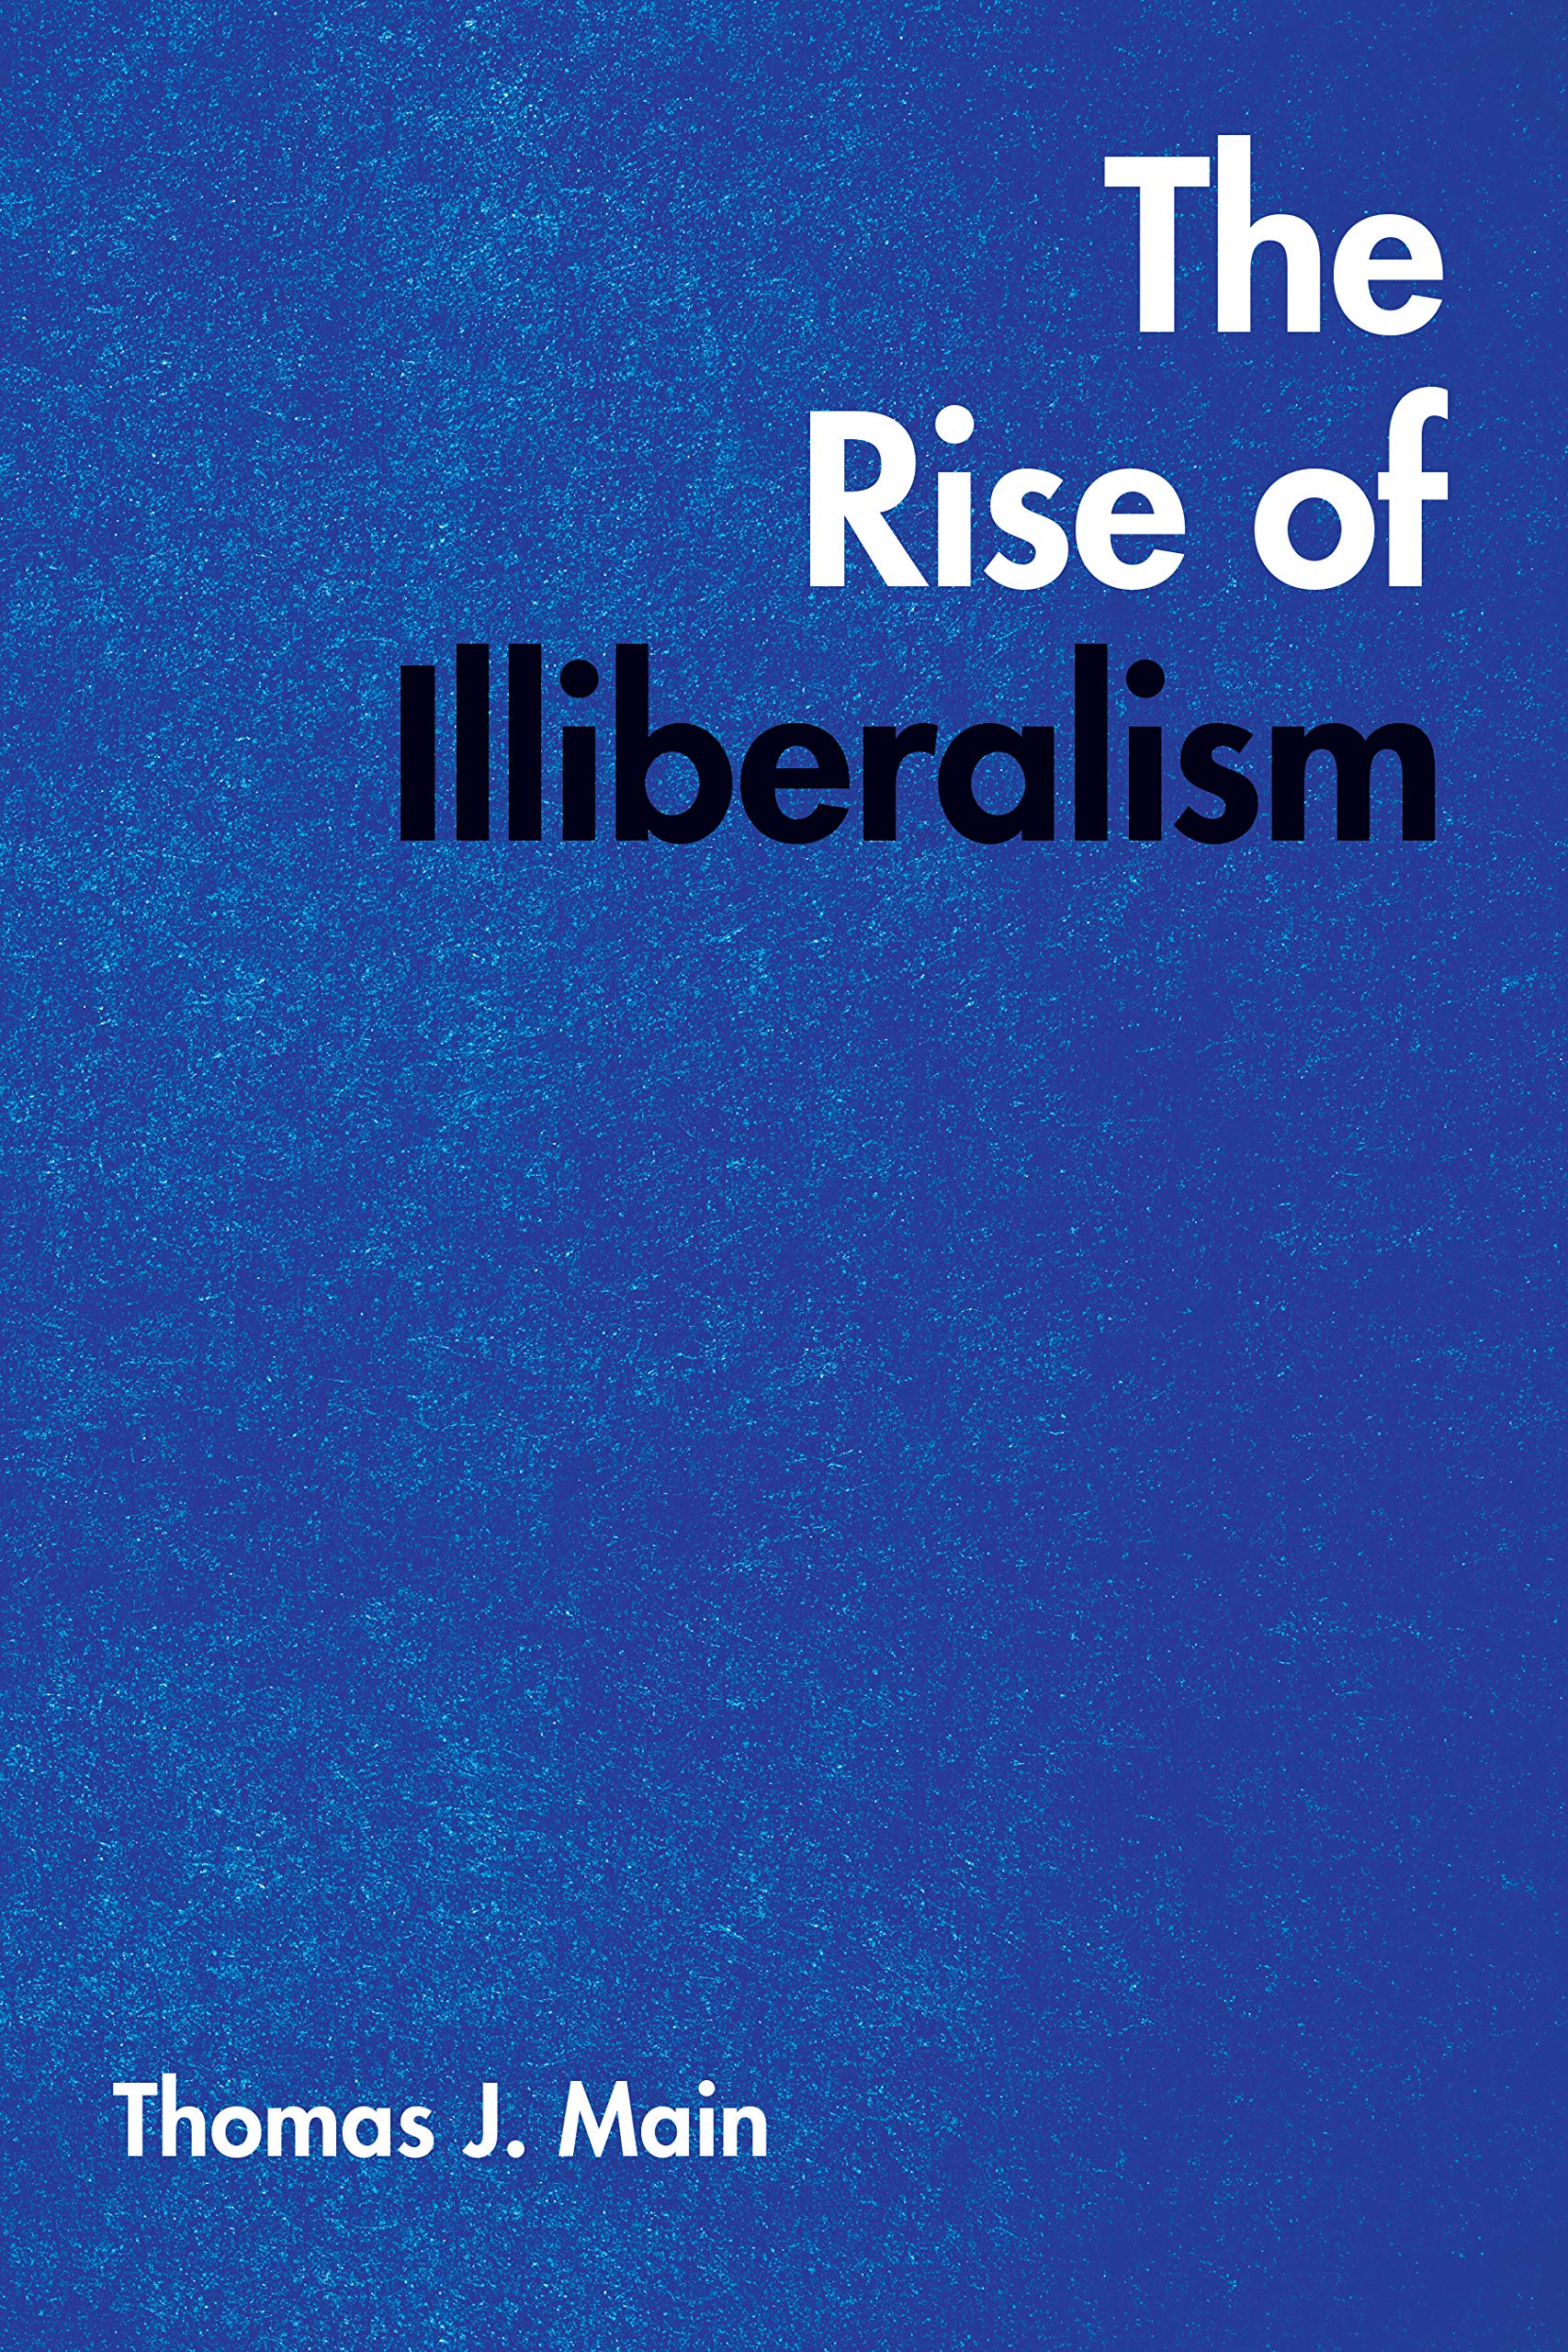 The Rise of Illiberalism | Thomas J. Main image0